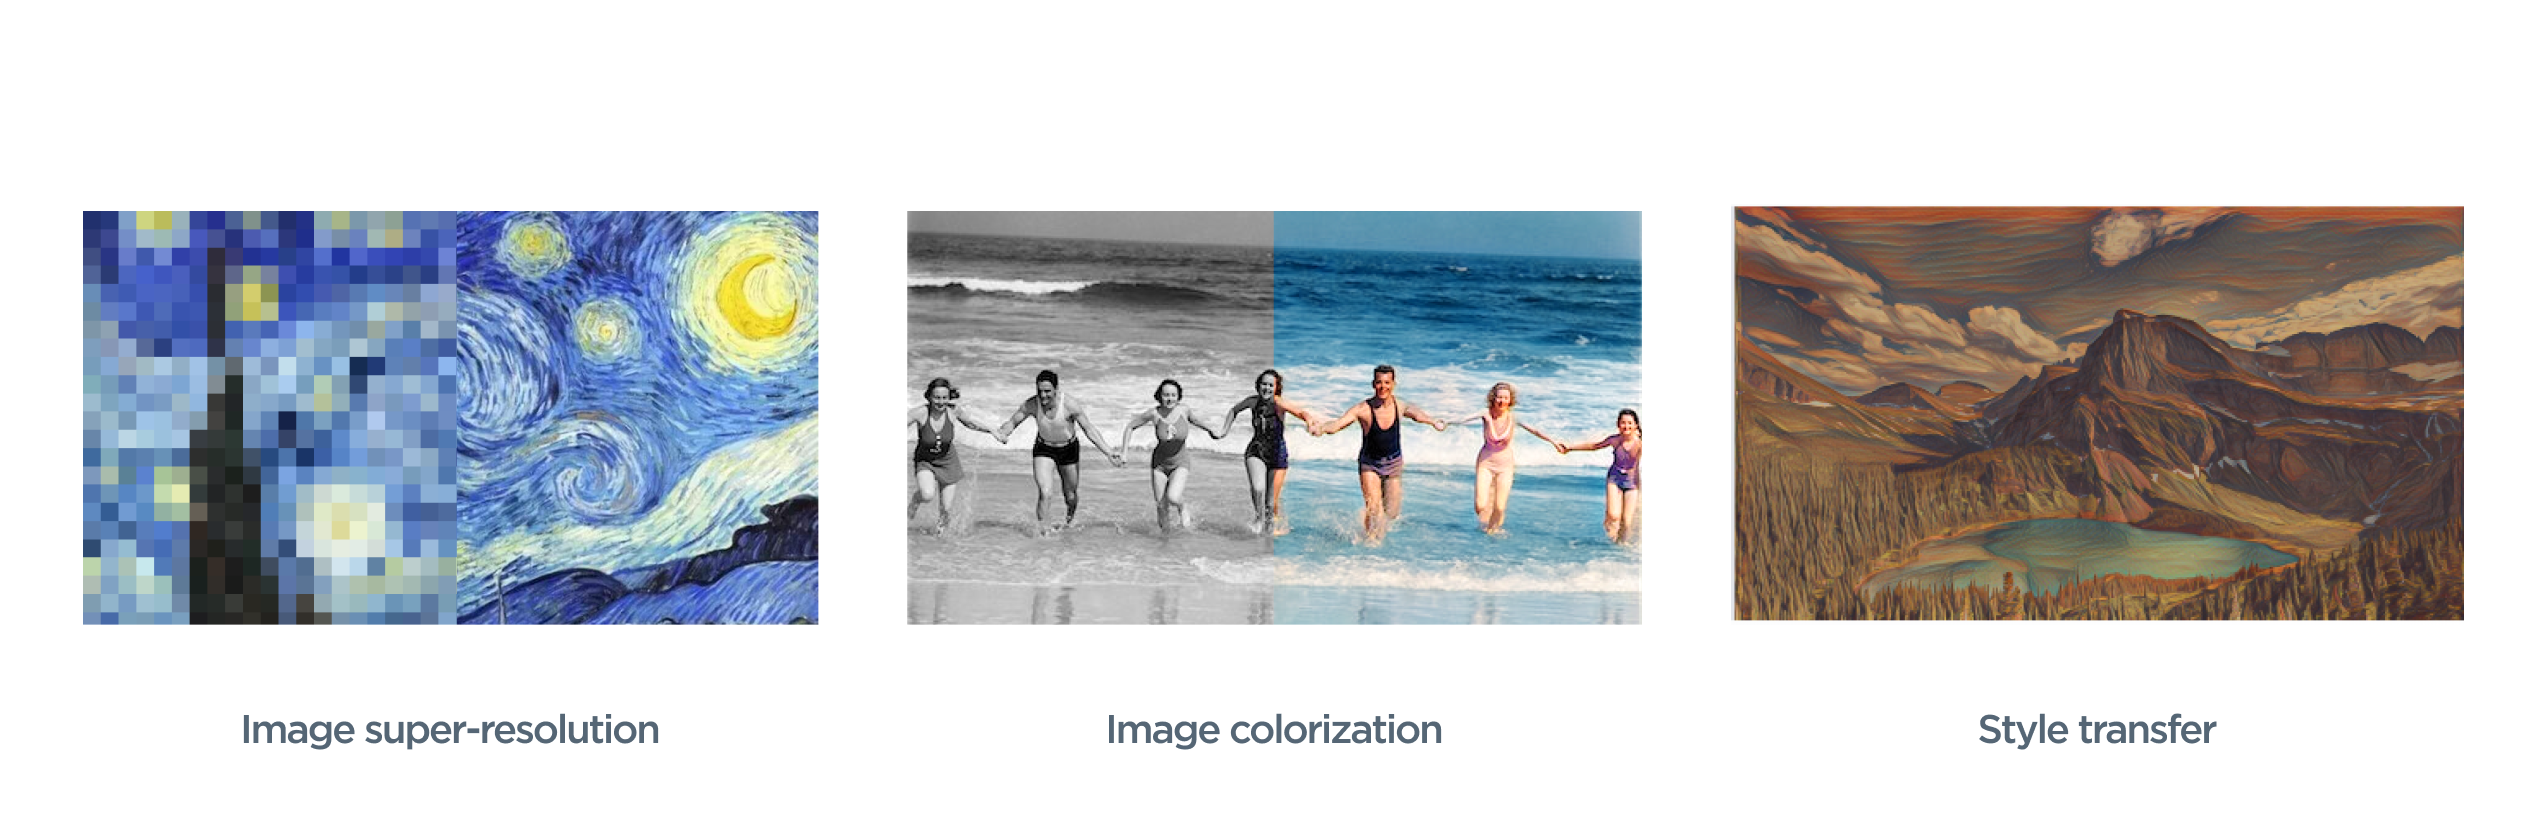 Image colorization, super resolution, style transfer